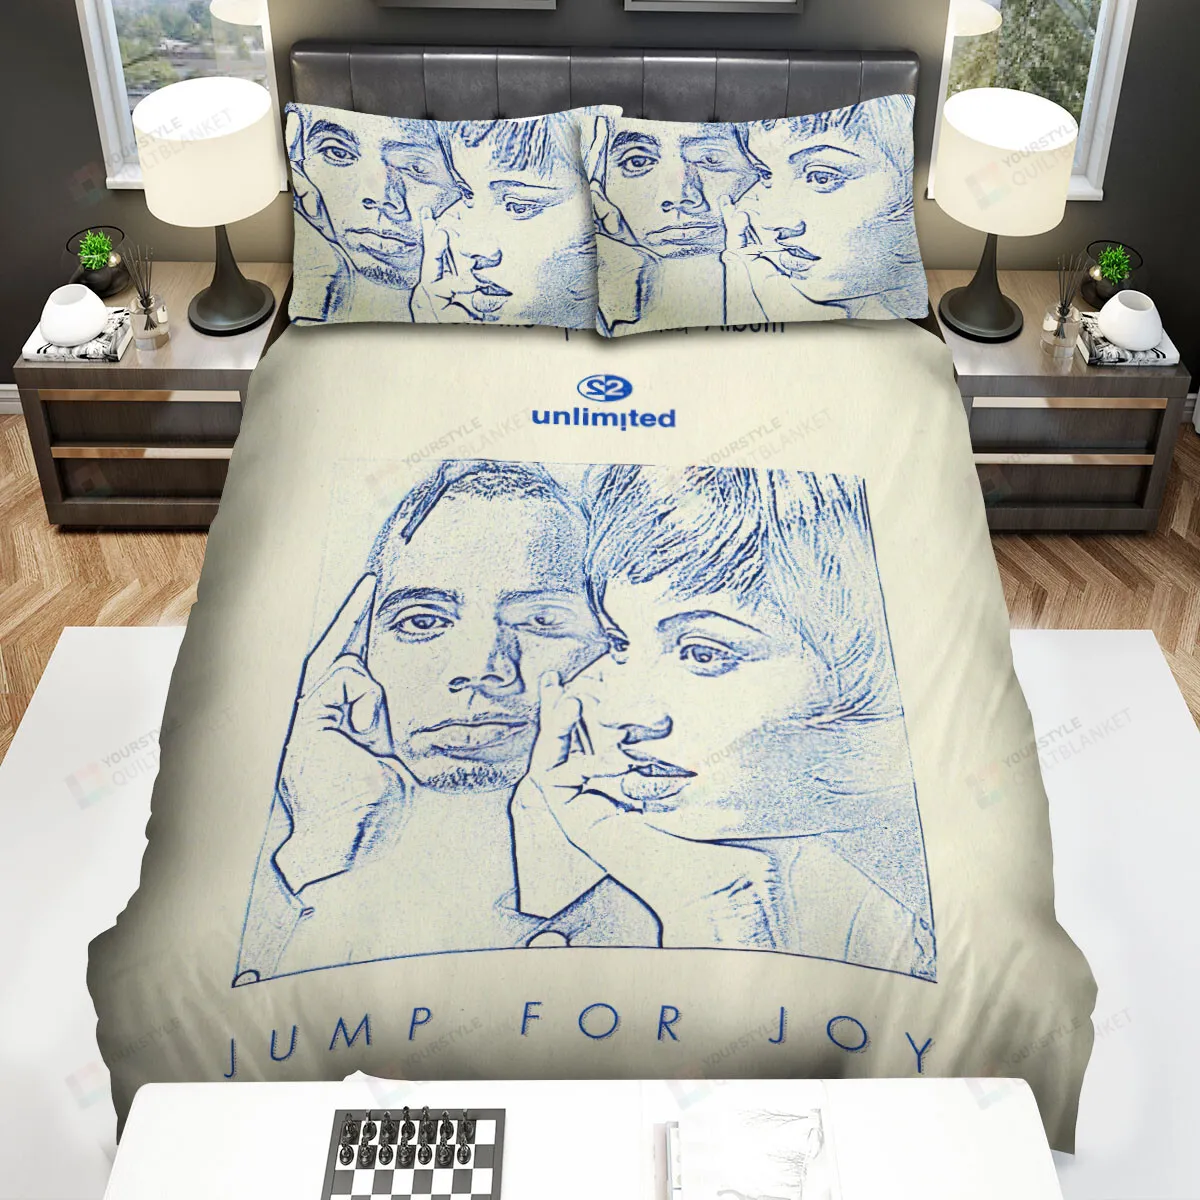 2 Unlimited Hit Unlimited Art Bed Sheets Spread Comforter Duvet Cover Bedding Sets